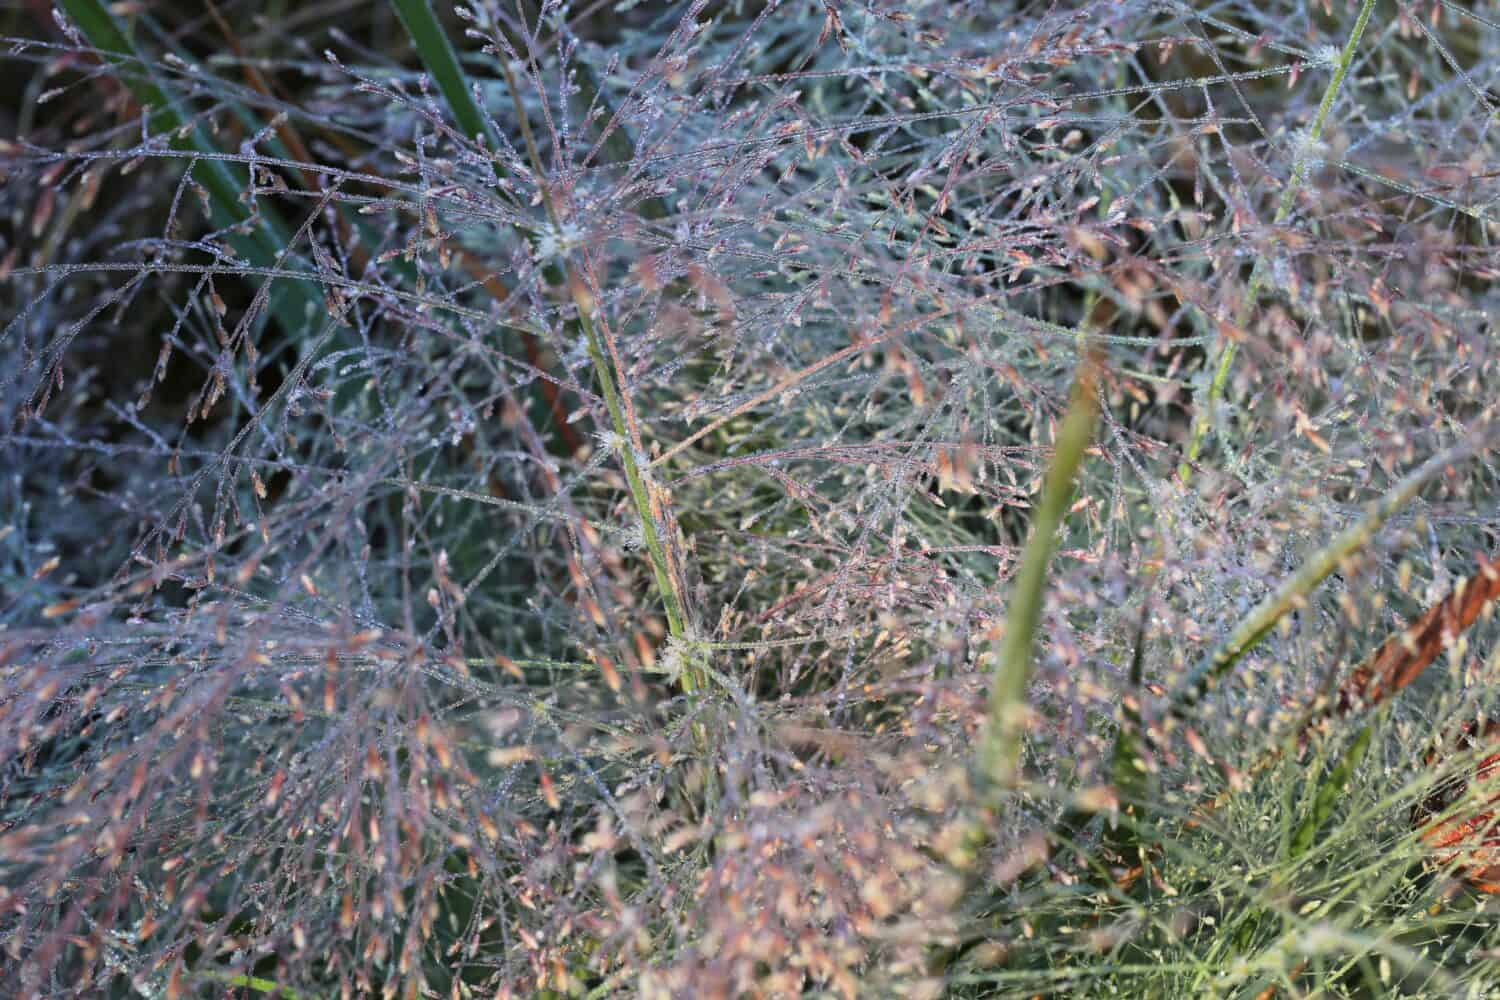 Purple love grass in sunny October